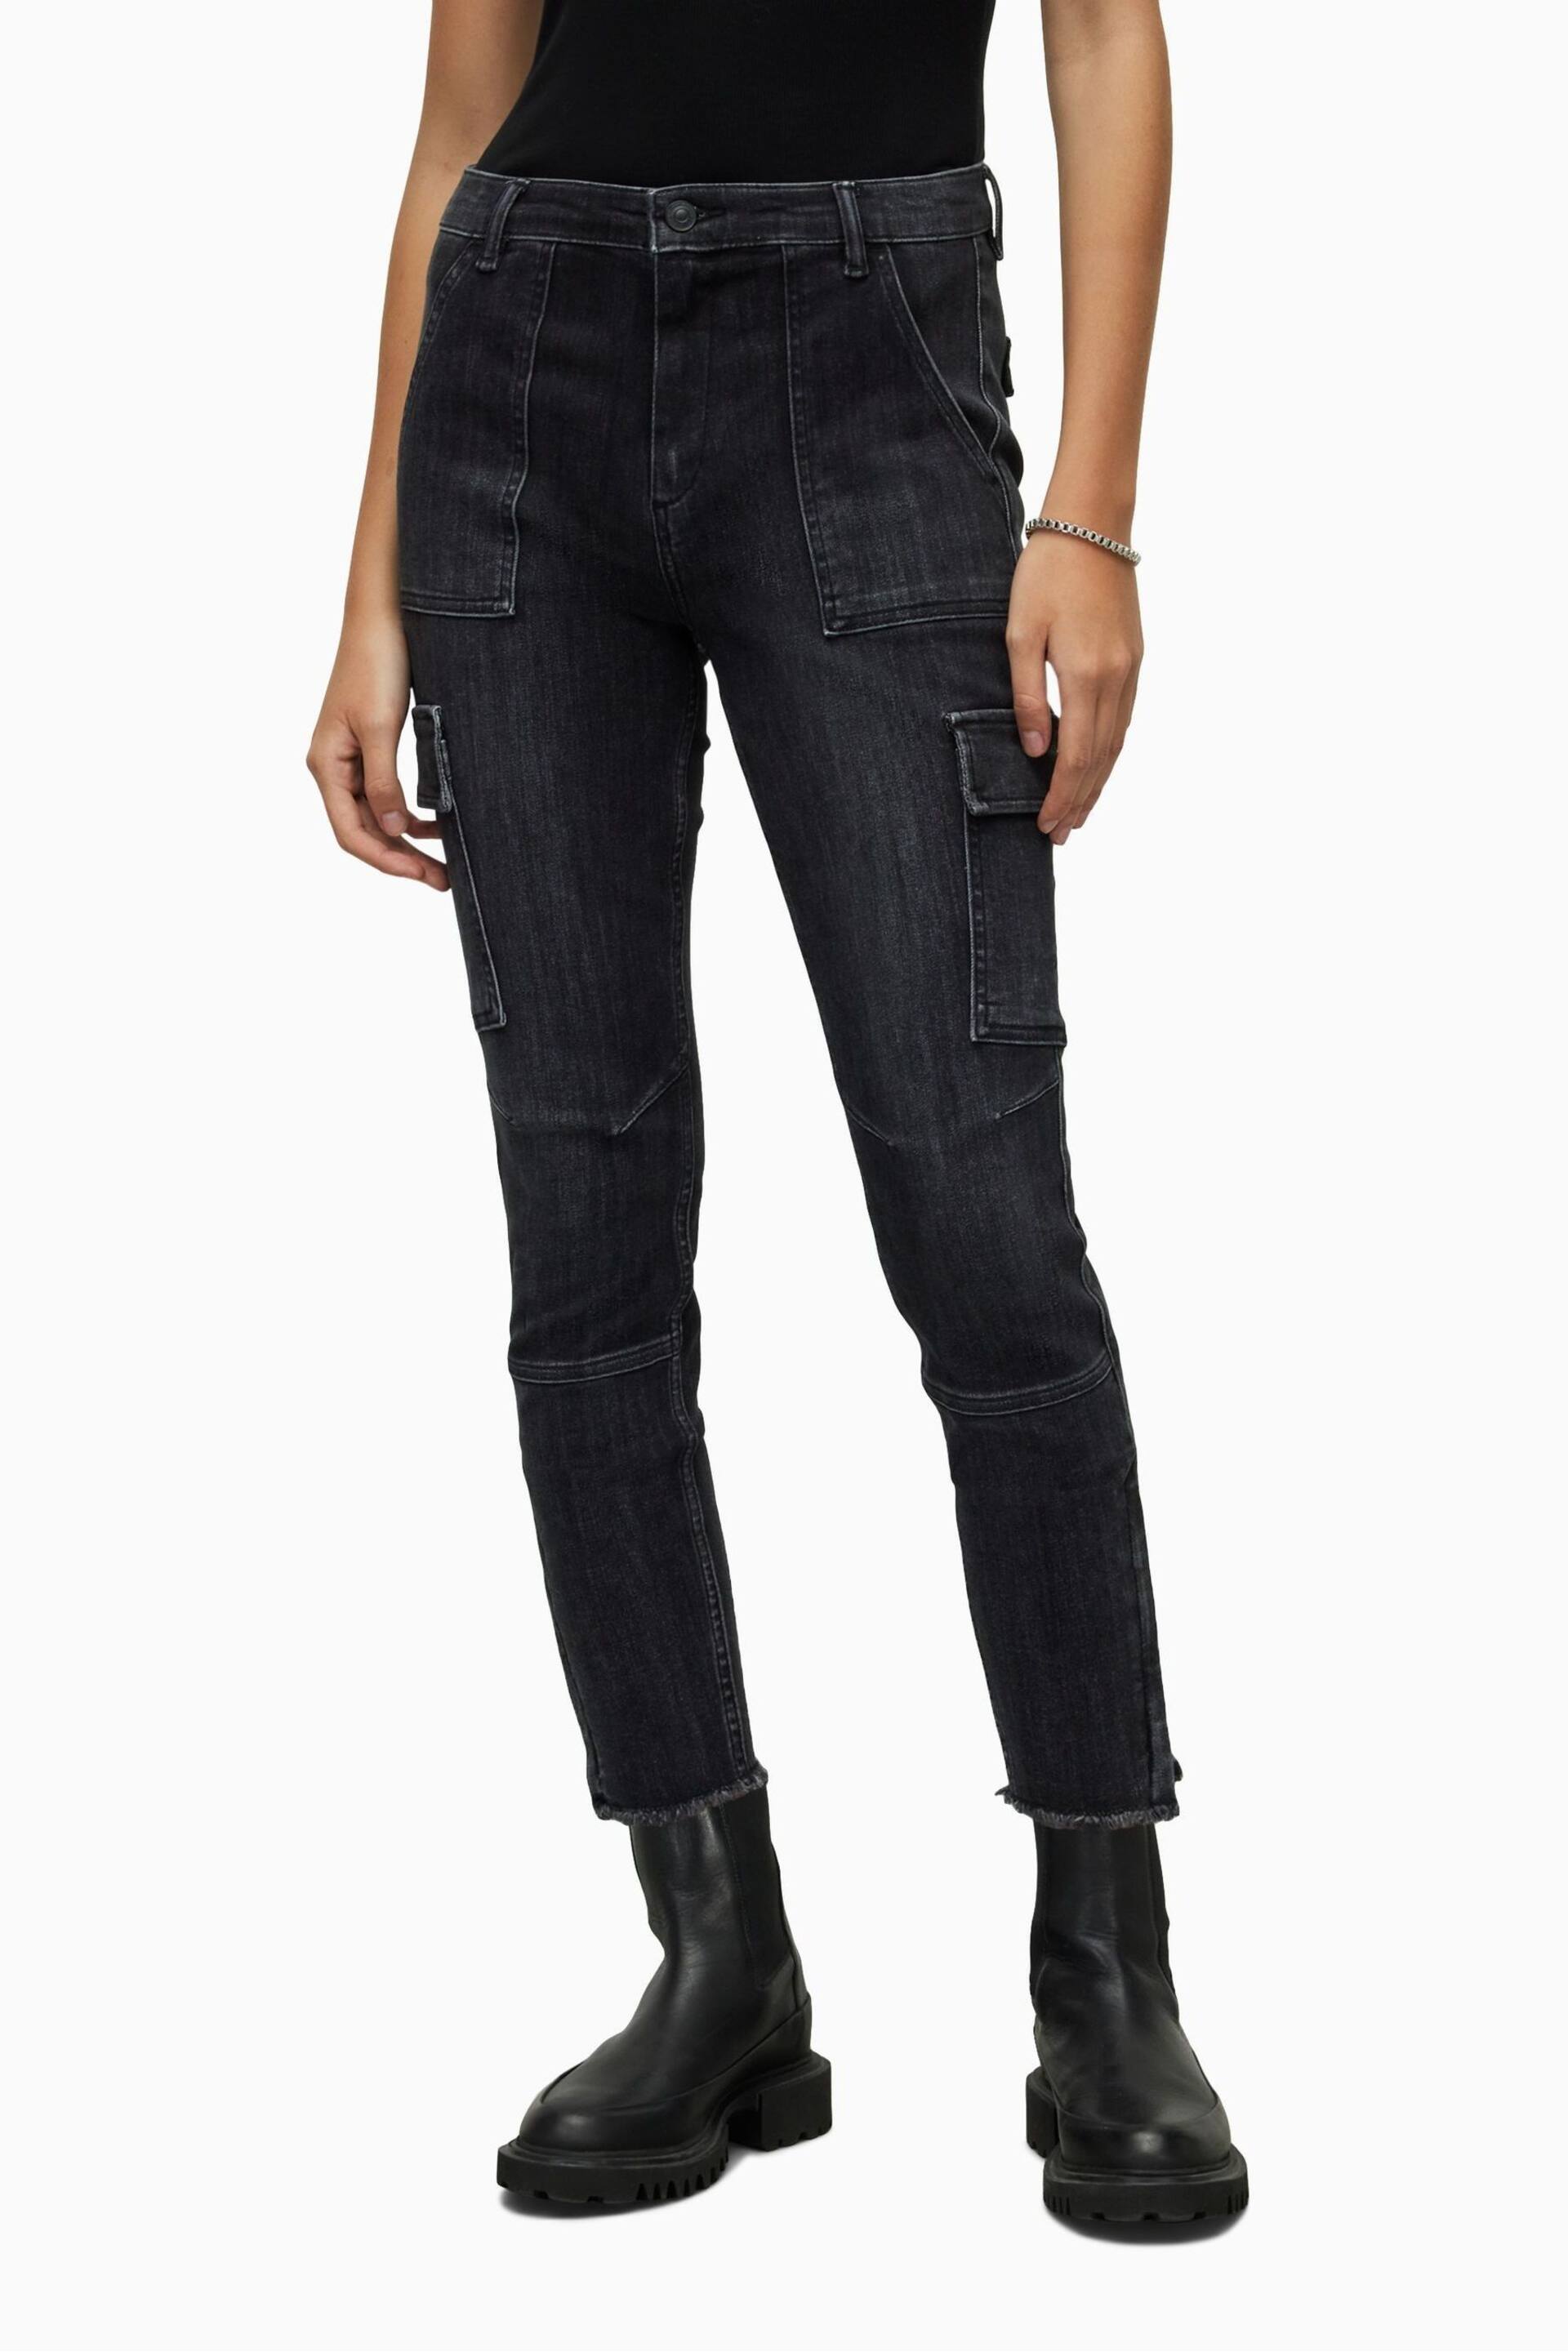 AllSaints Black Duran Skinny Cargo Jeans - Image 1 of 6